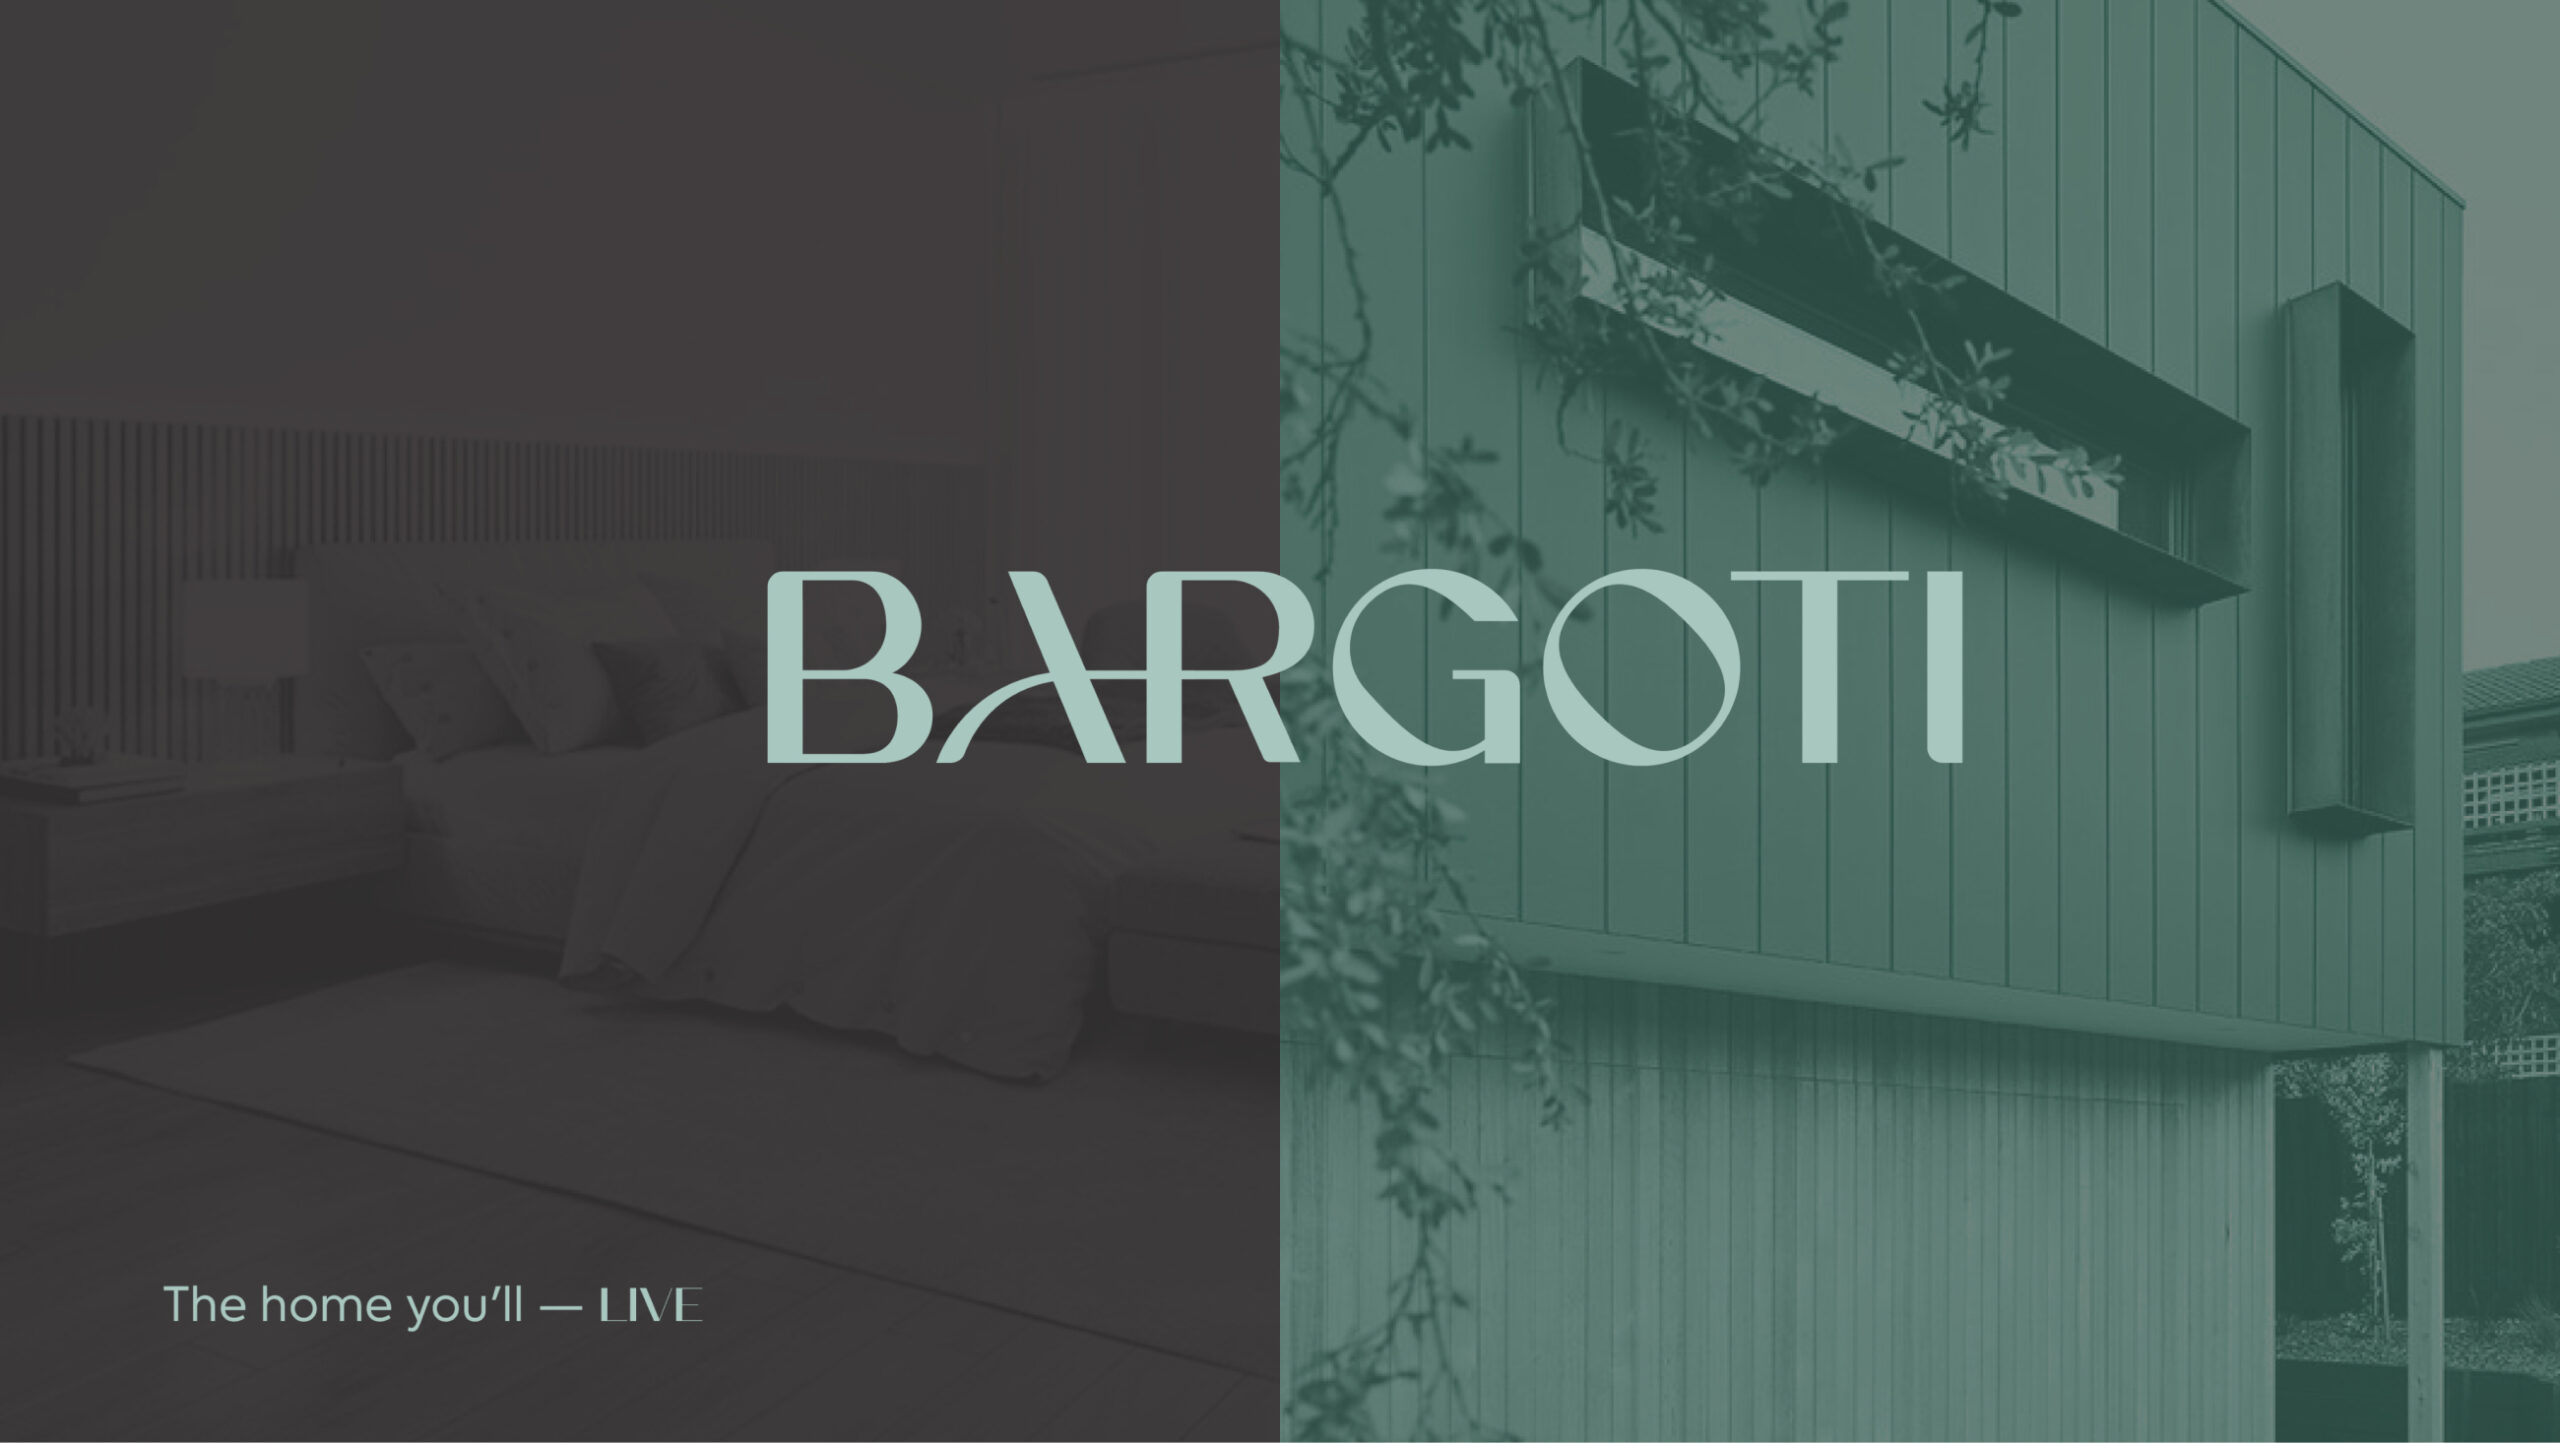 Bargoti Real Estate Branding, Signage & Design Development by TL Design Co.